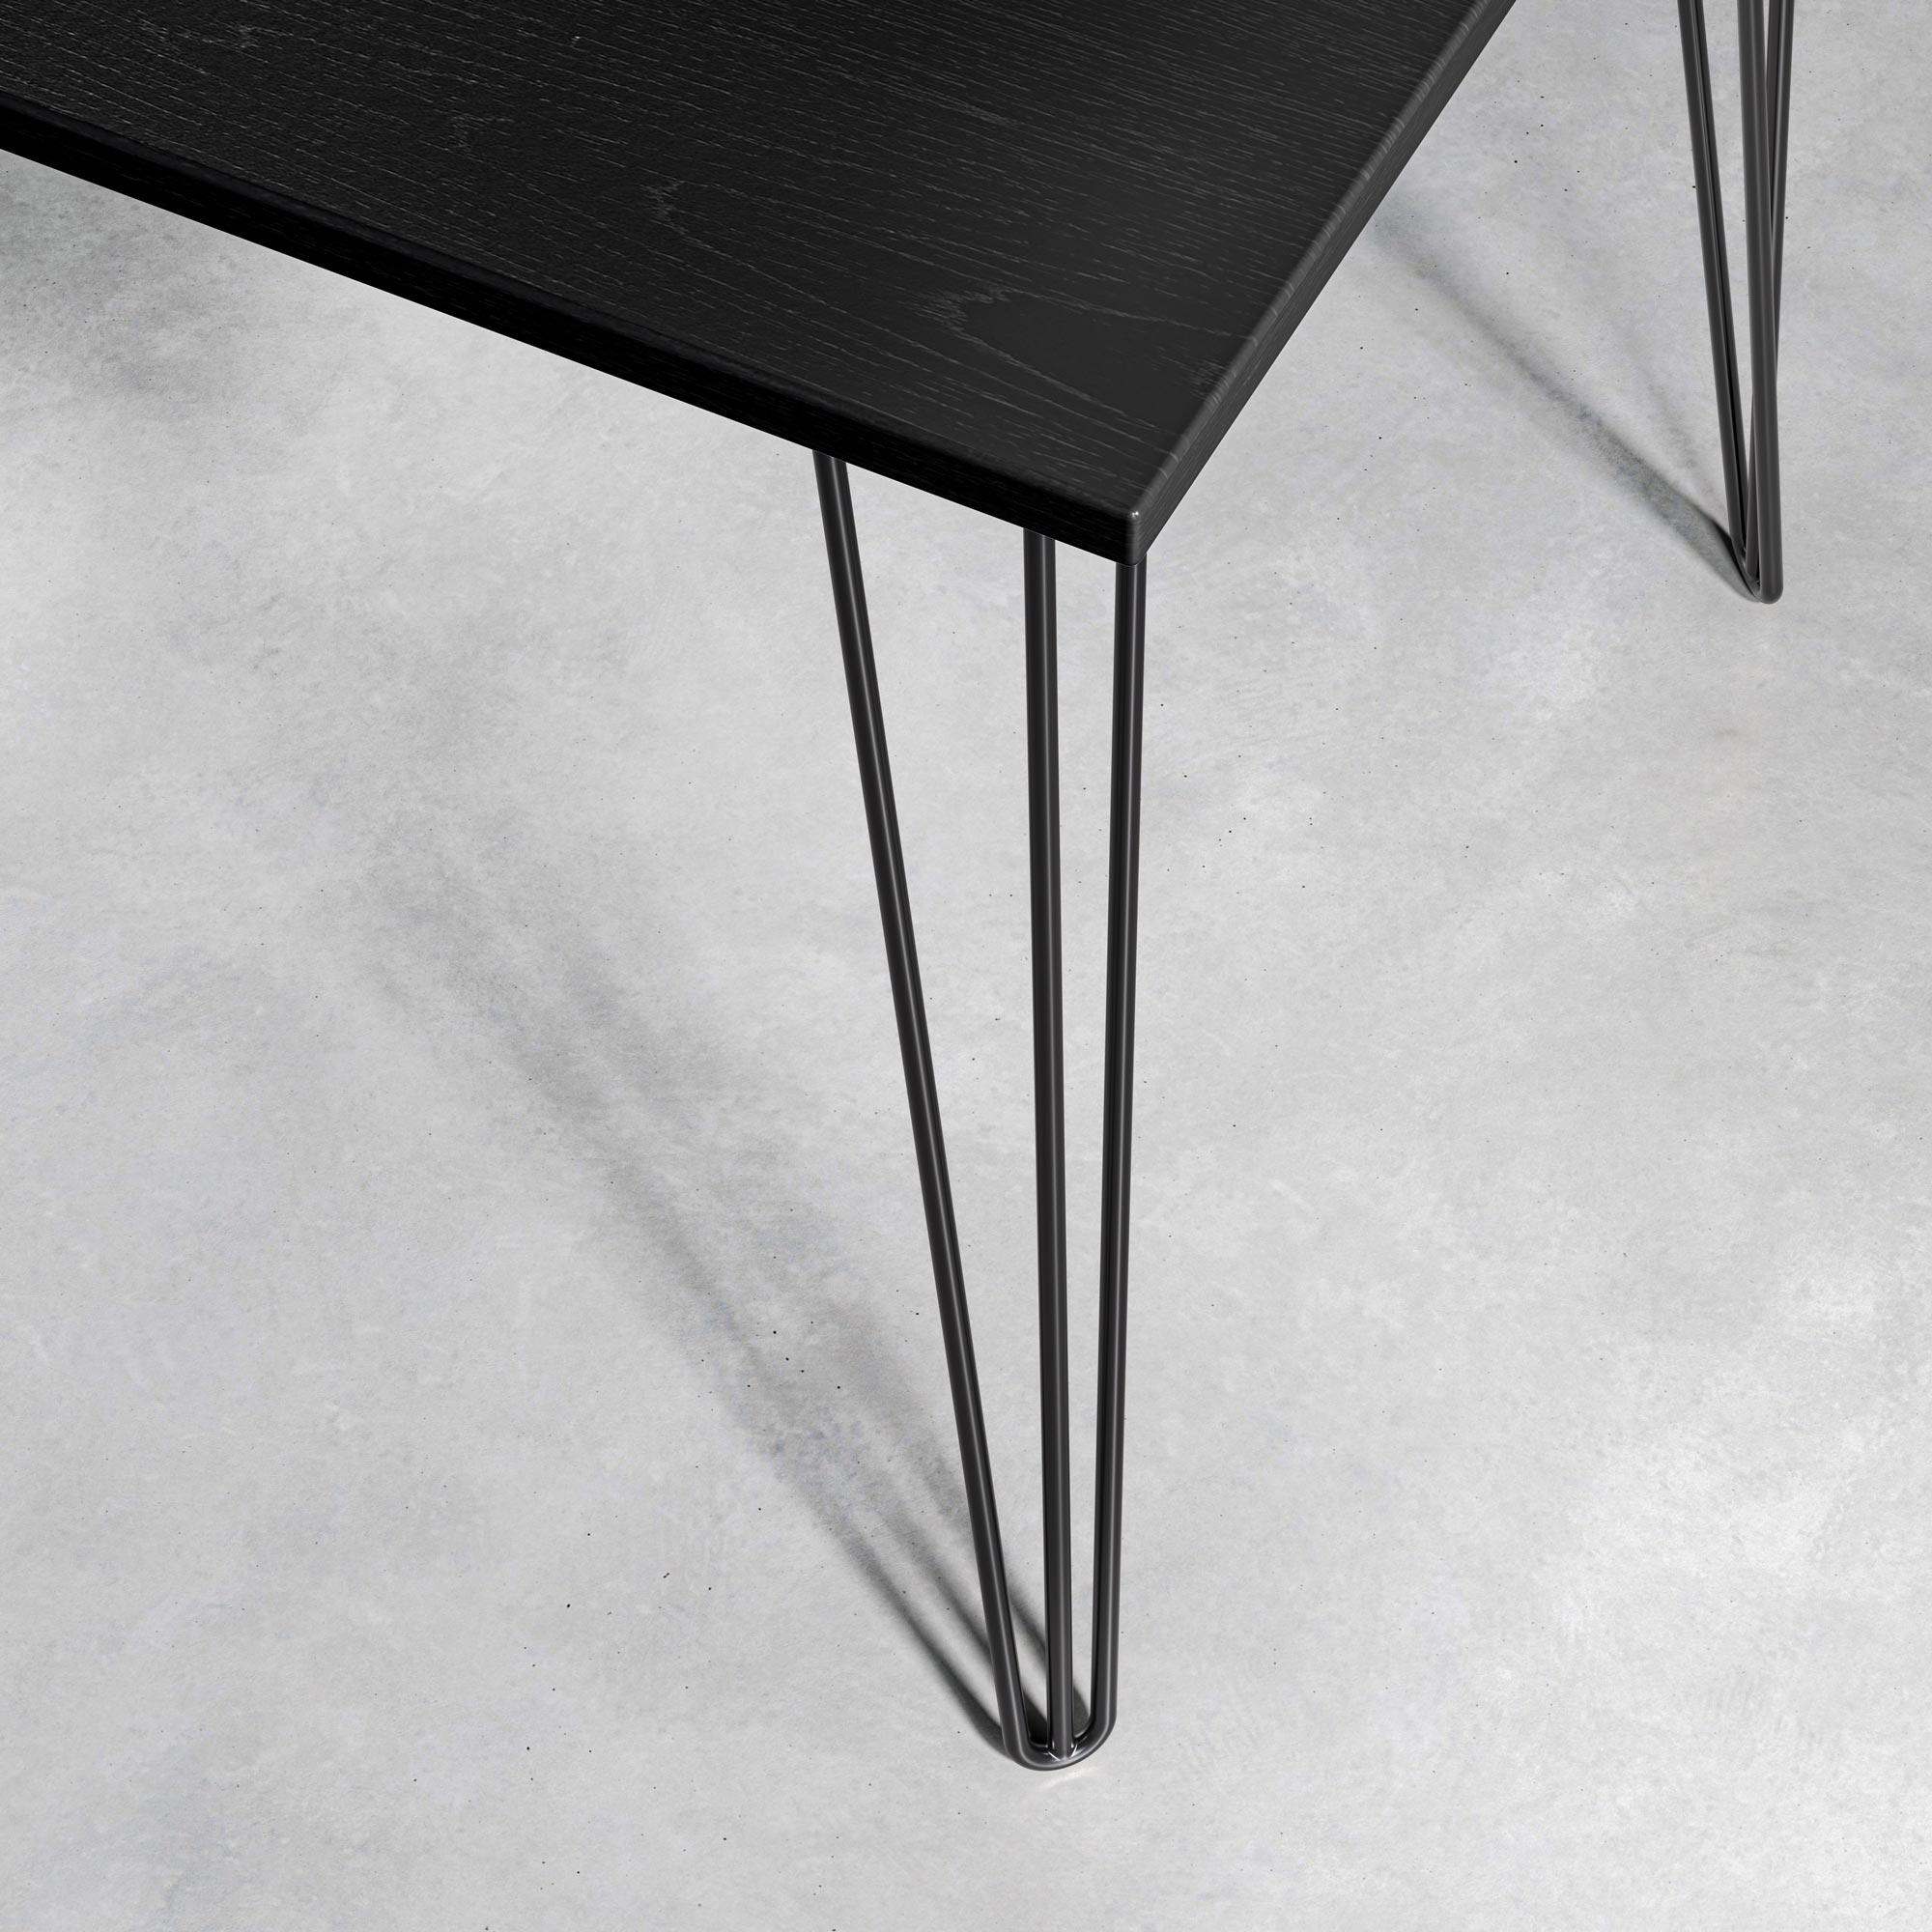 Black Ash Hairpin Table-Small (60cm x 120cm)-Black-The Hairpin Leg Co.